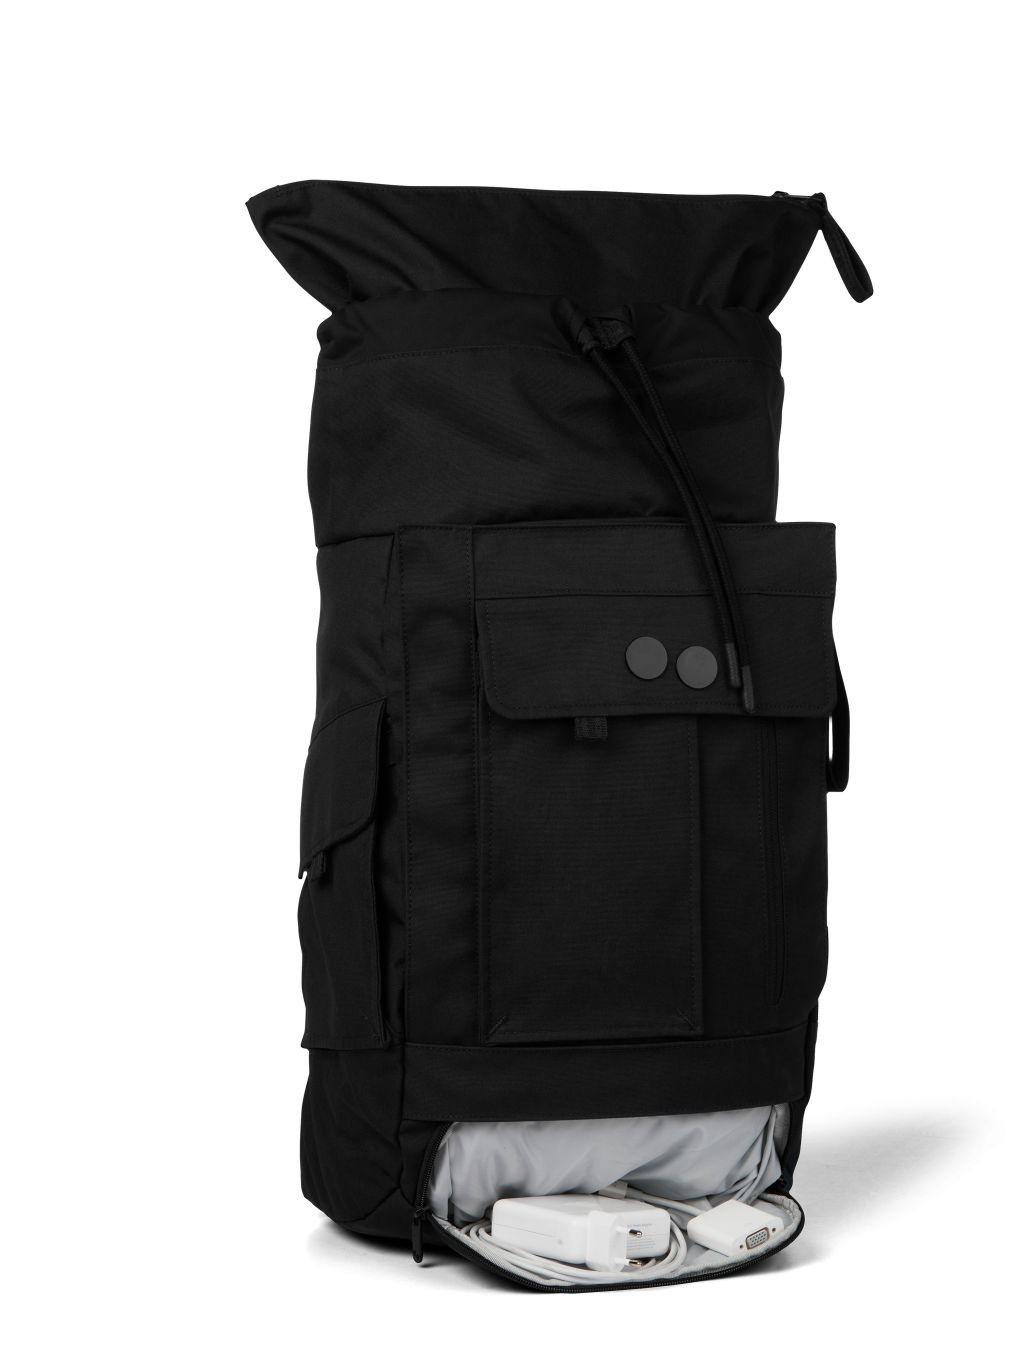 BLOK medium Backpack construct black